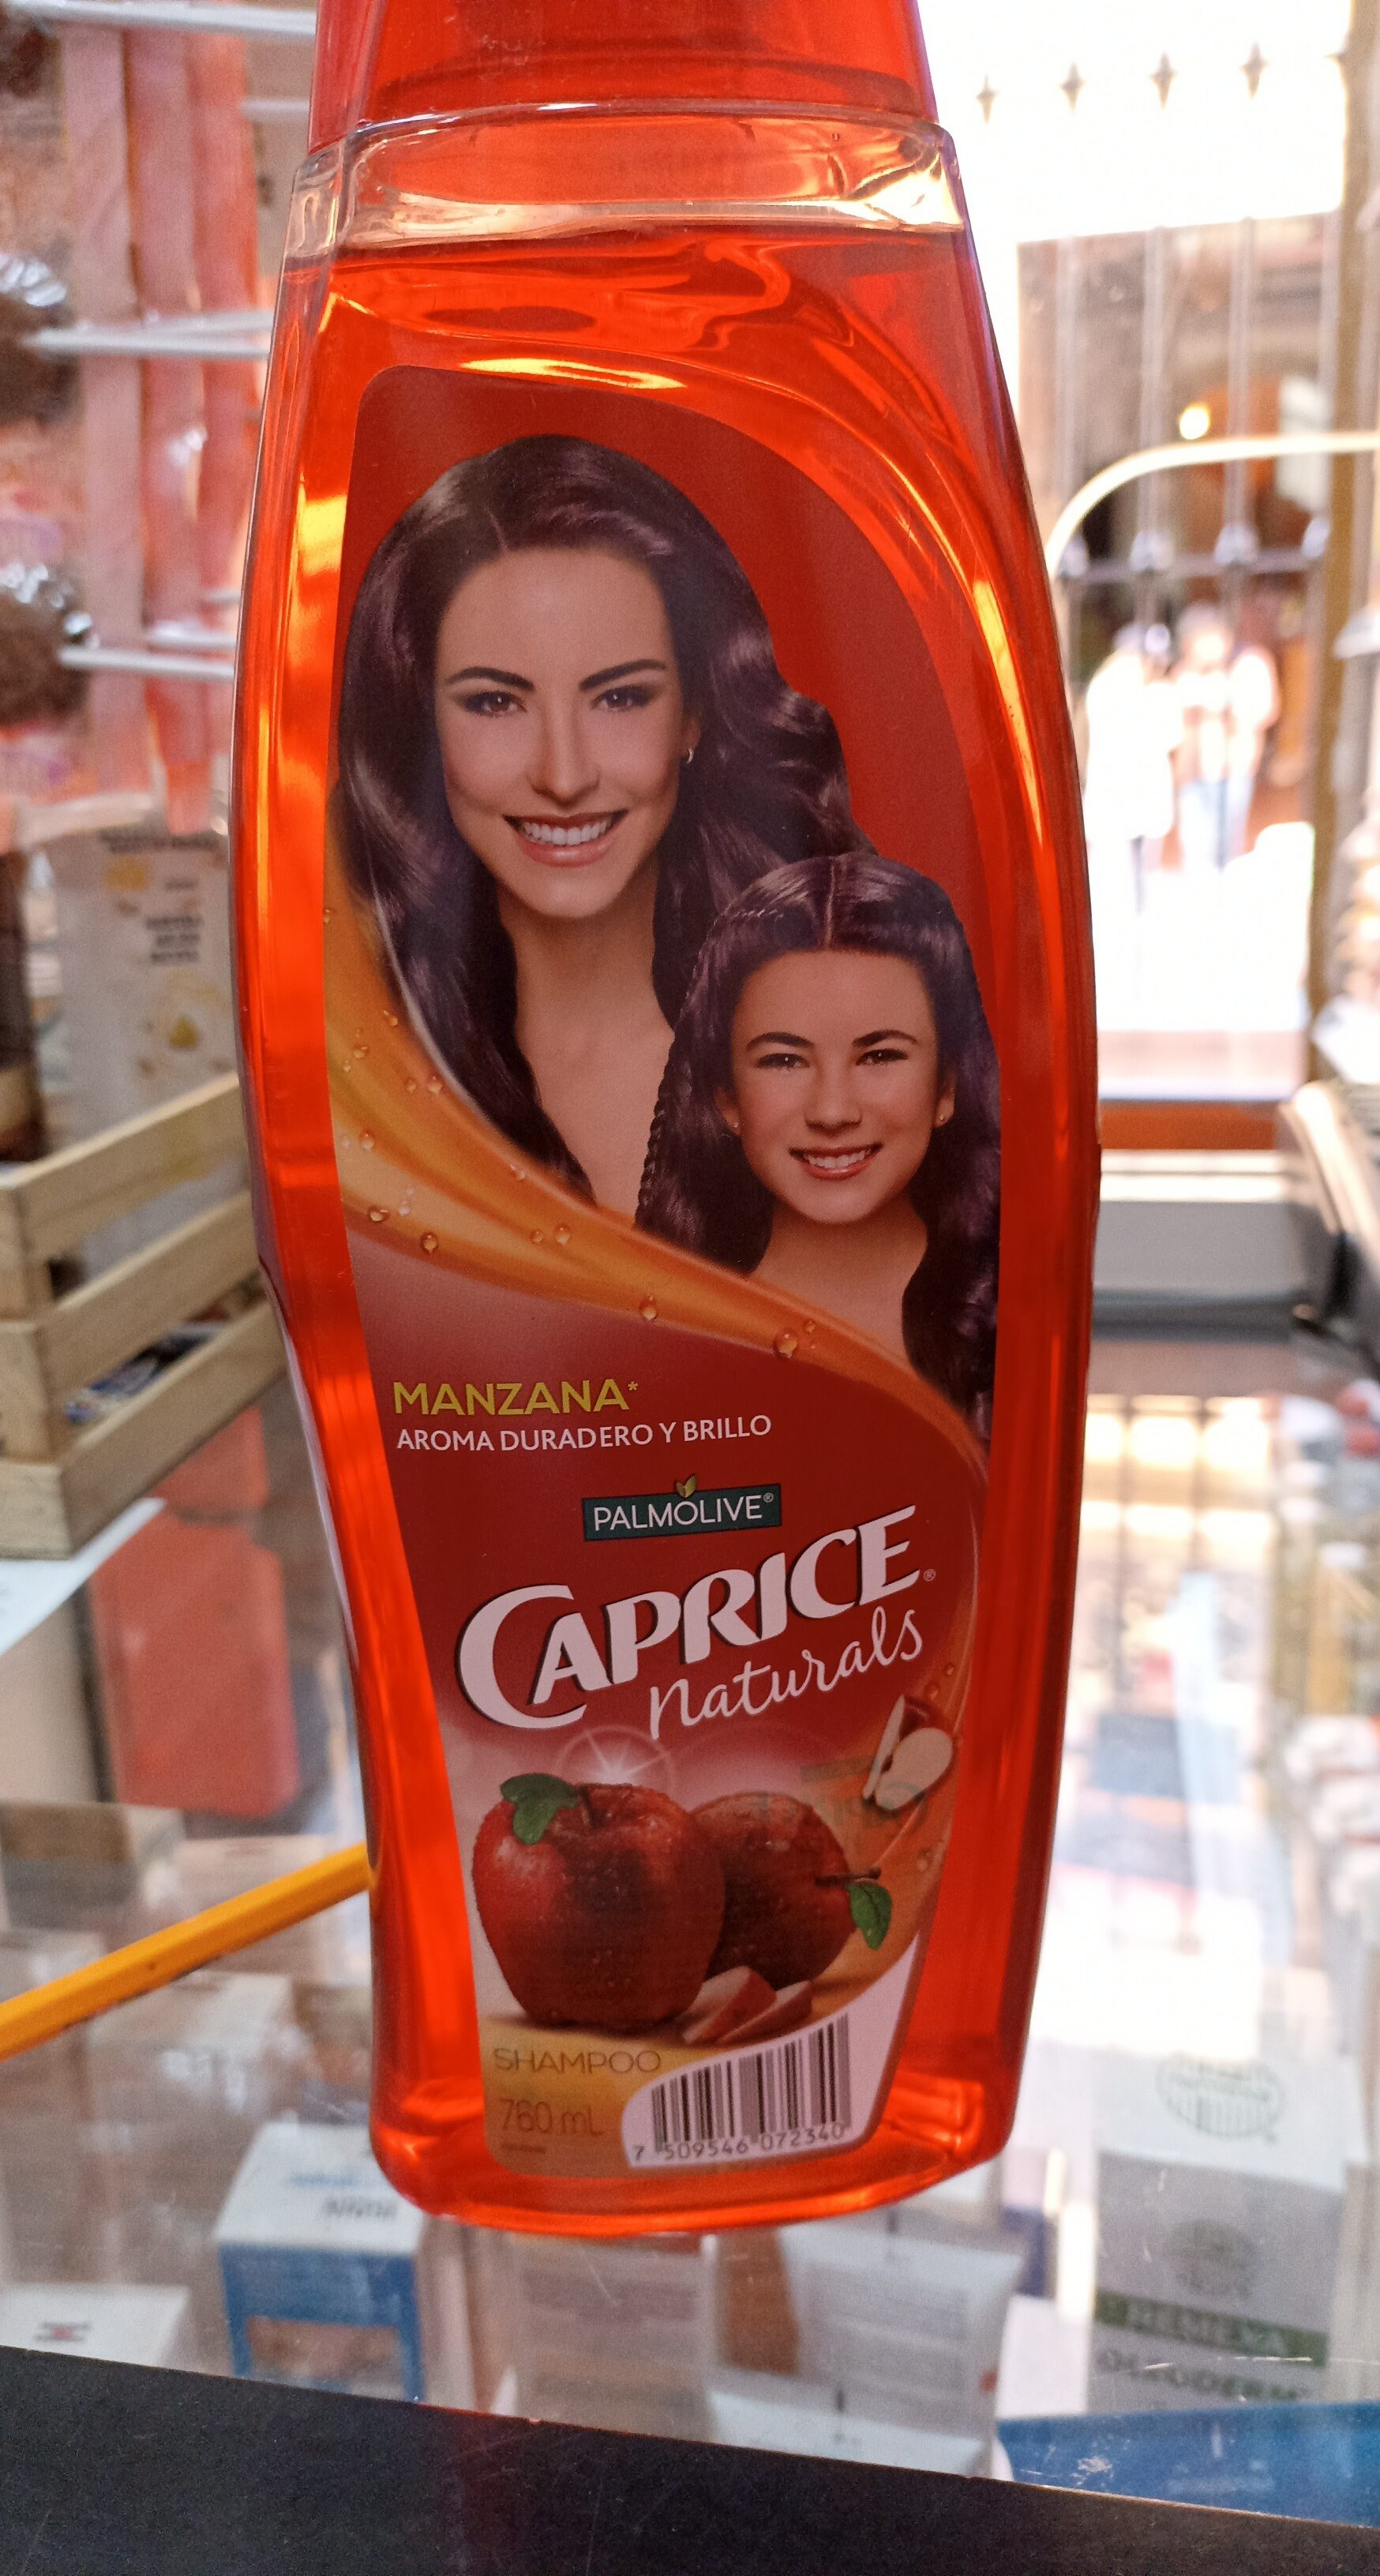 Caprice manzana - Product - es